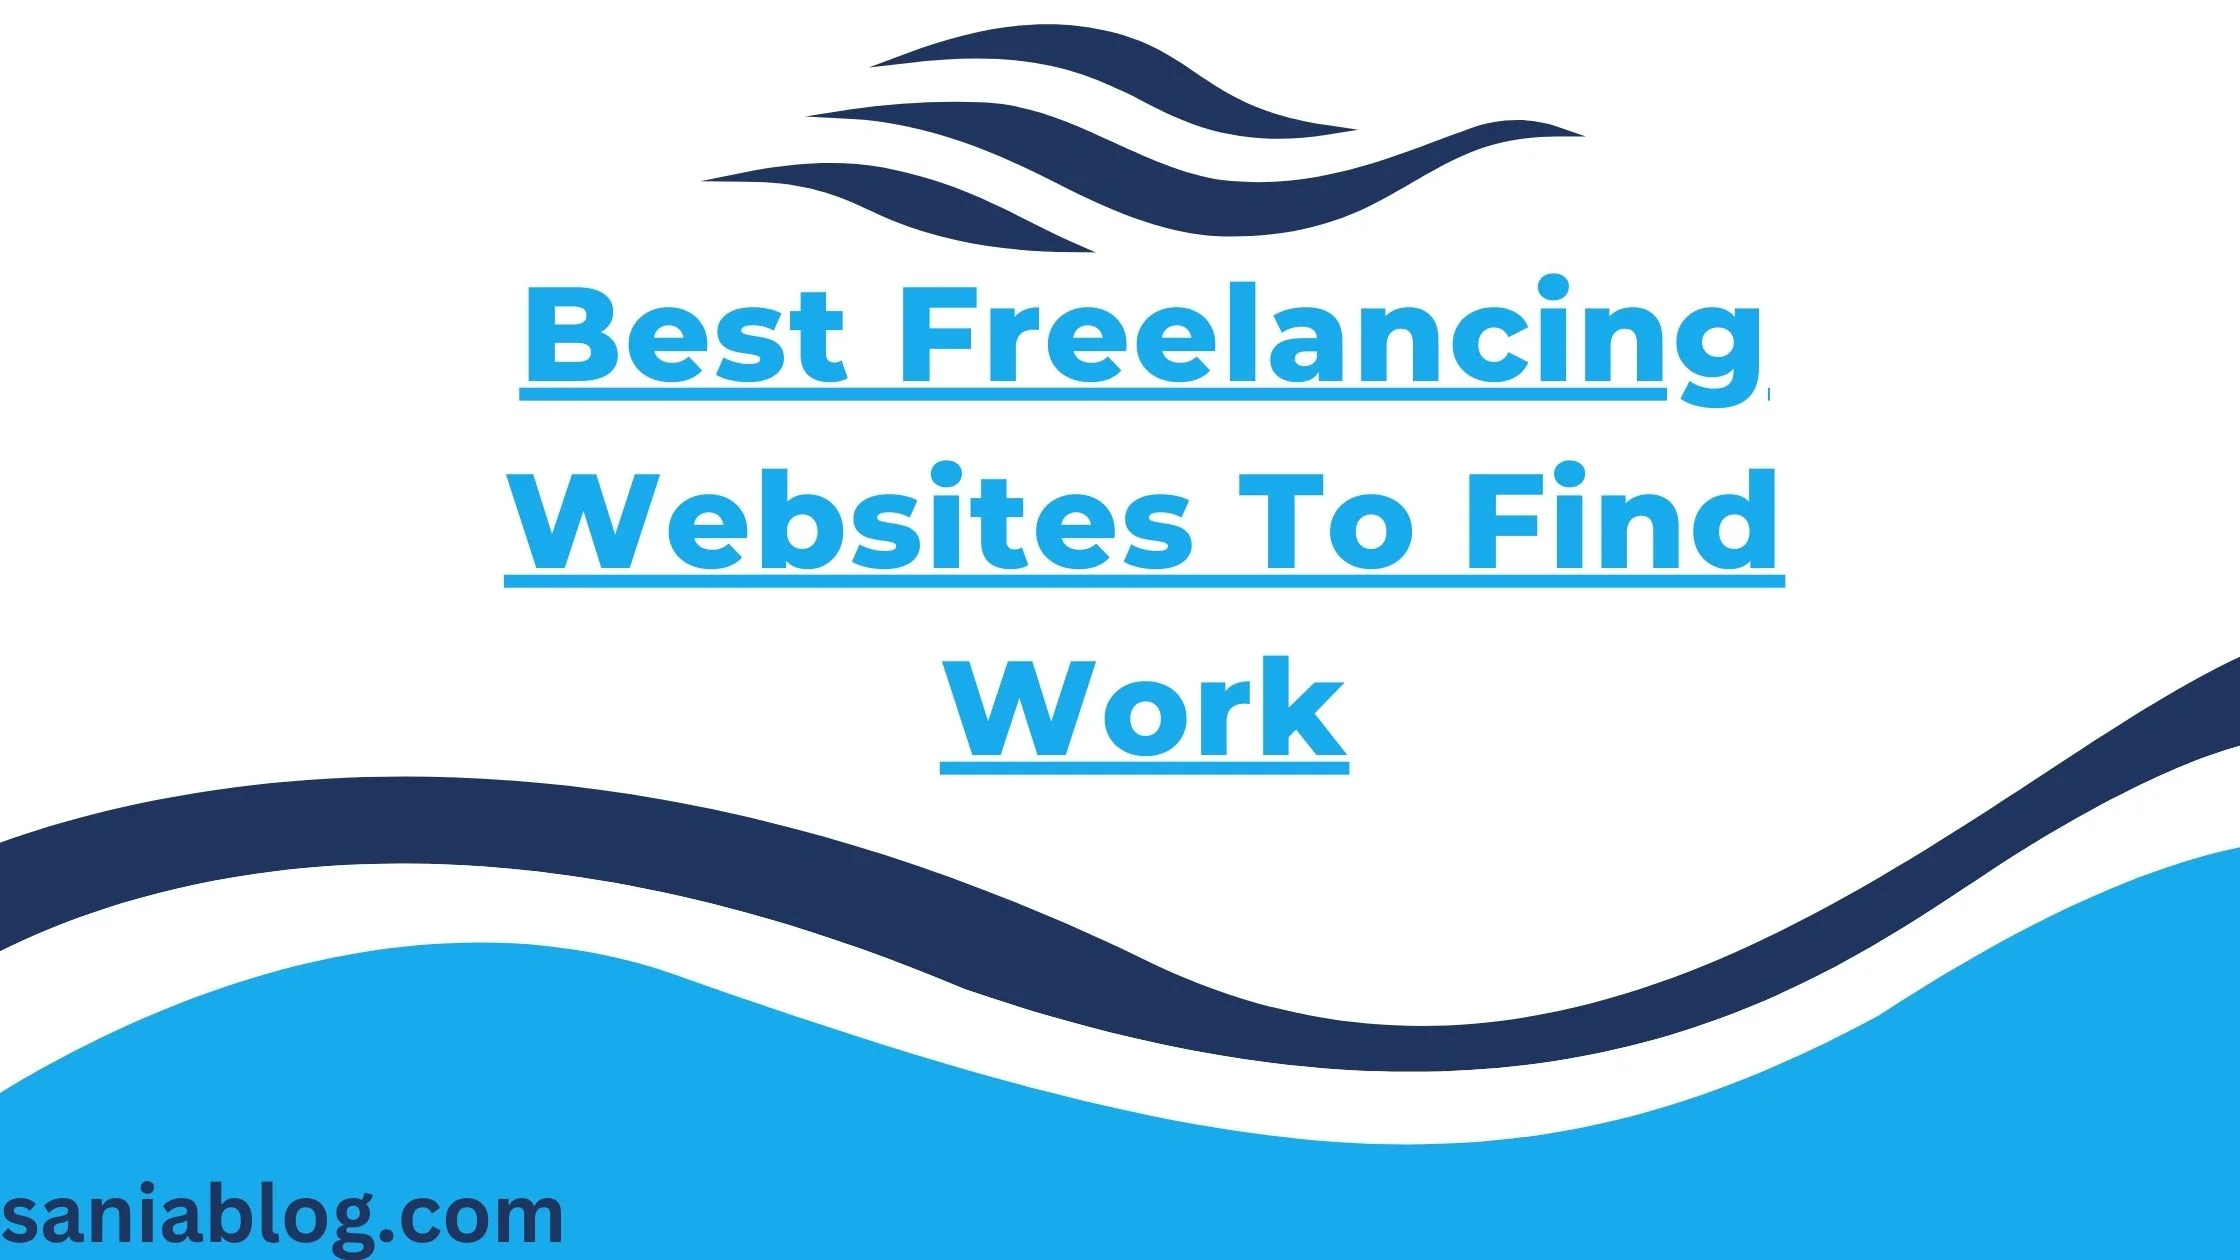 BEST FREELANCING WEBSITES TO FIND WORK